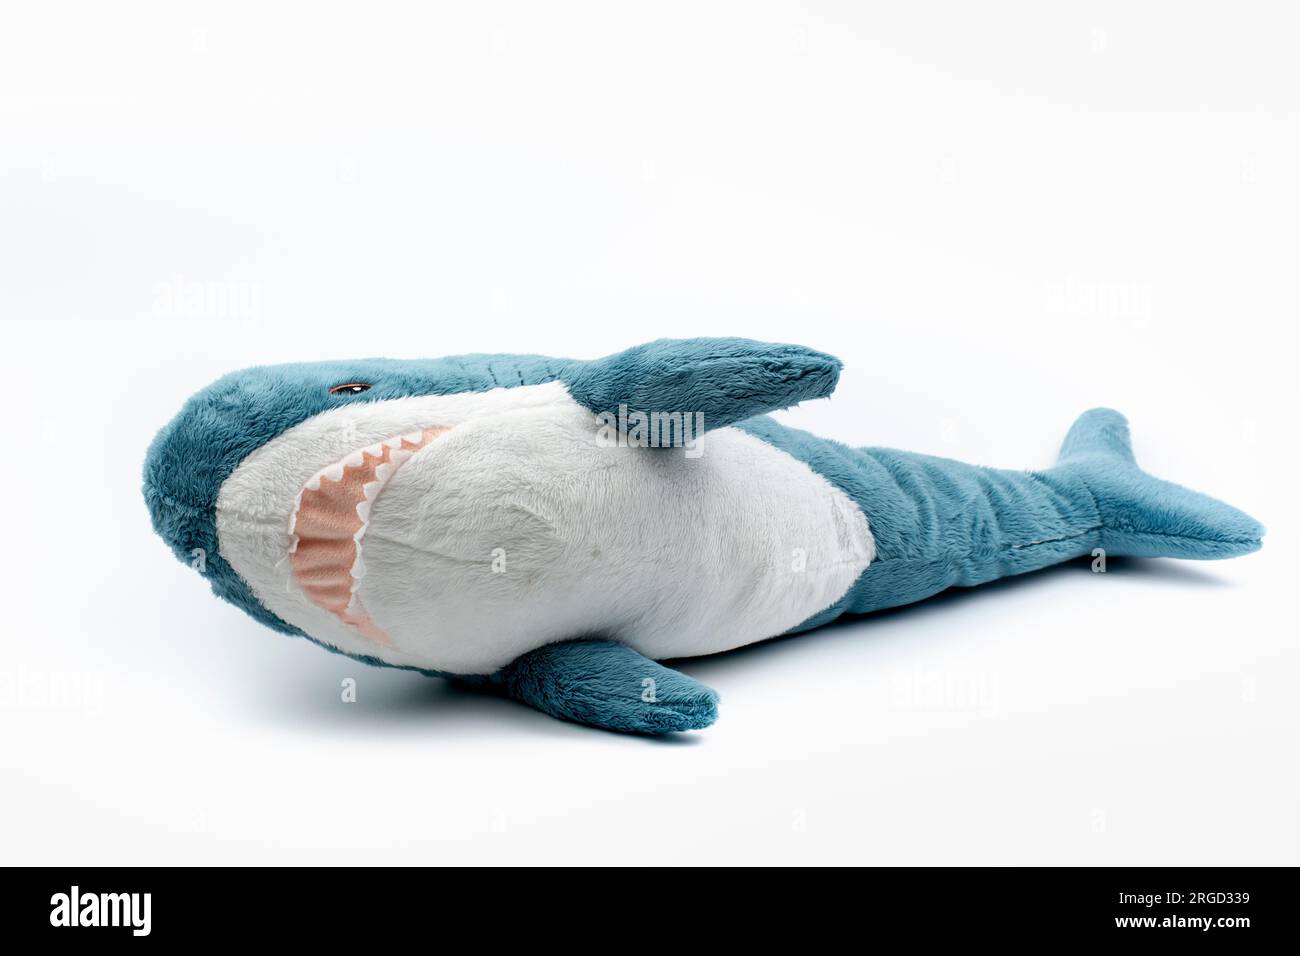 Nova Bana, Slovaquie - 7 août 2023 : Blahaj, peluche Ikea en polyester recyclé. Peluche Animal Toy requin bleu sur fond blanc. Banque D'Images